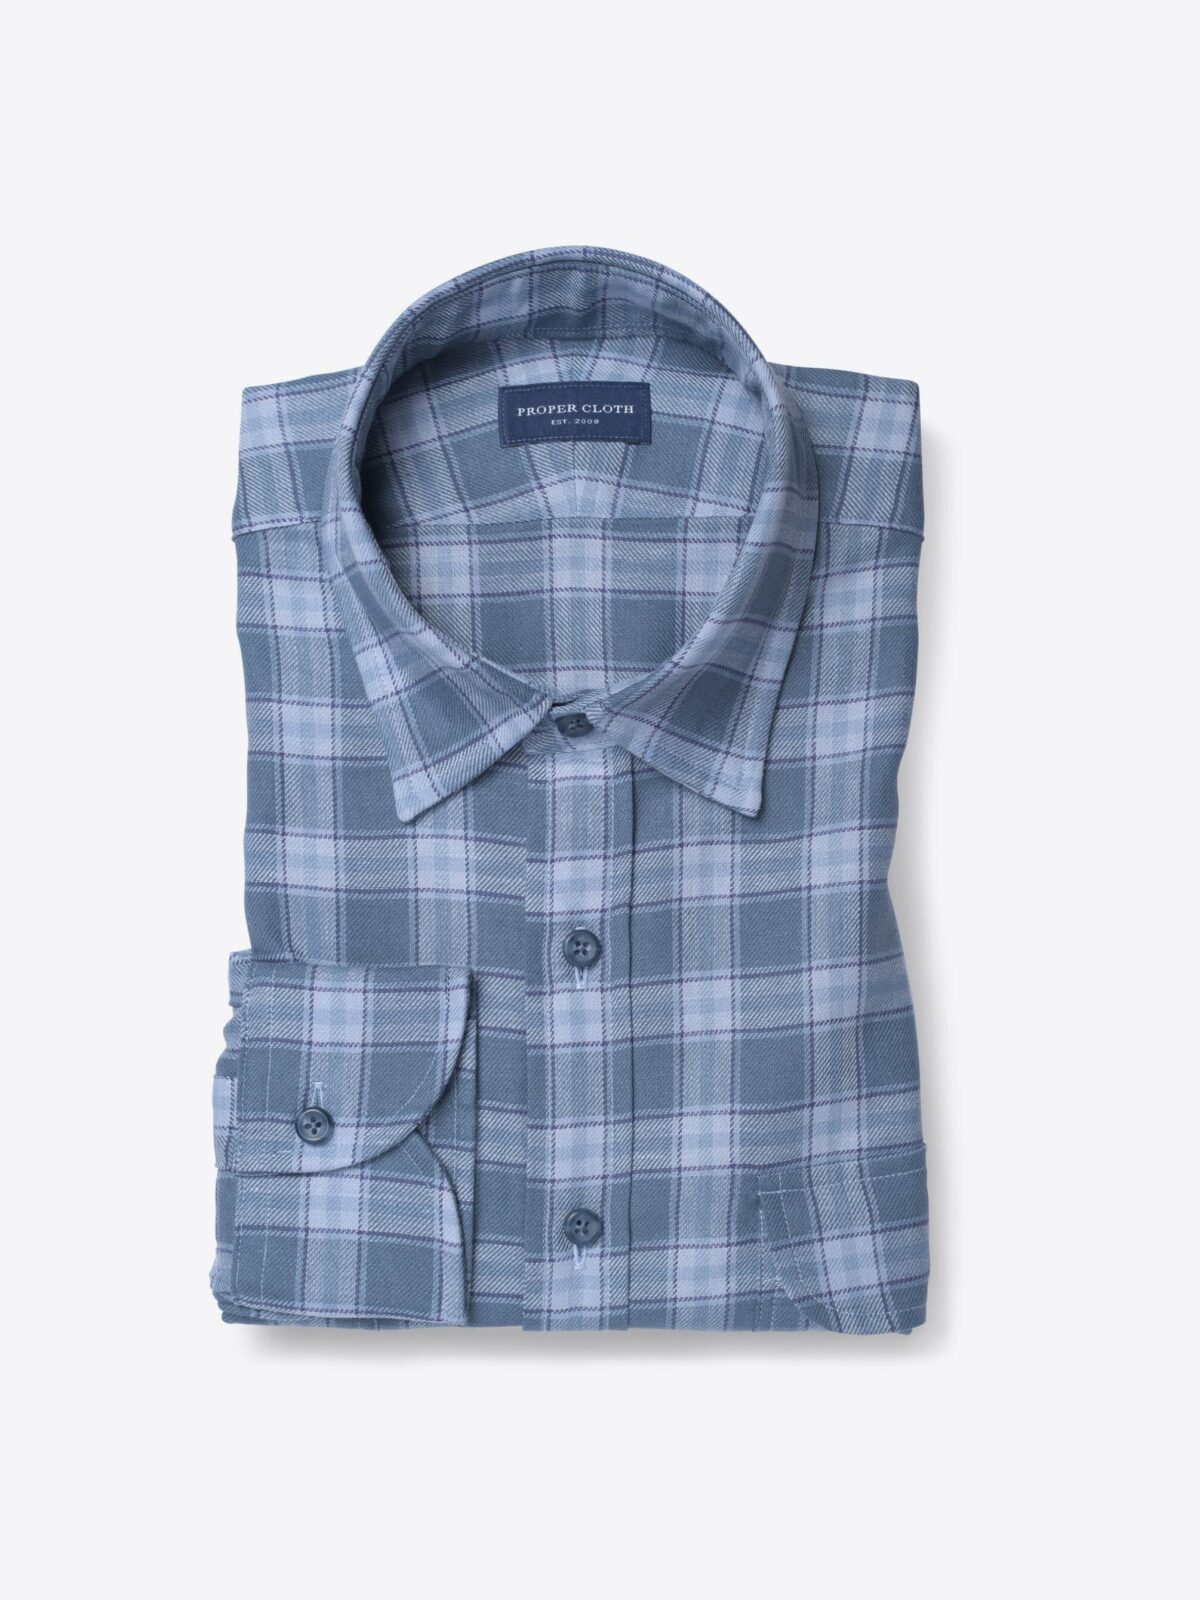 Mesa Slate Blue Cotton and Linen Plaid Shirt by Proper Cloth